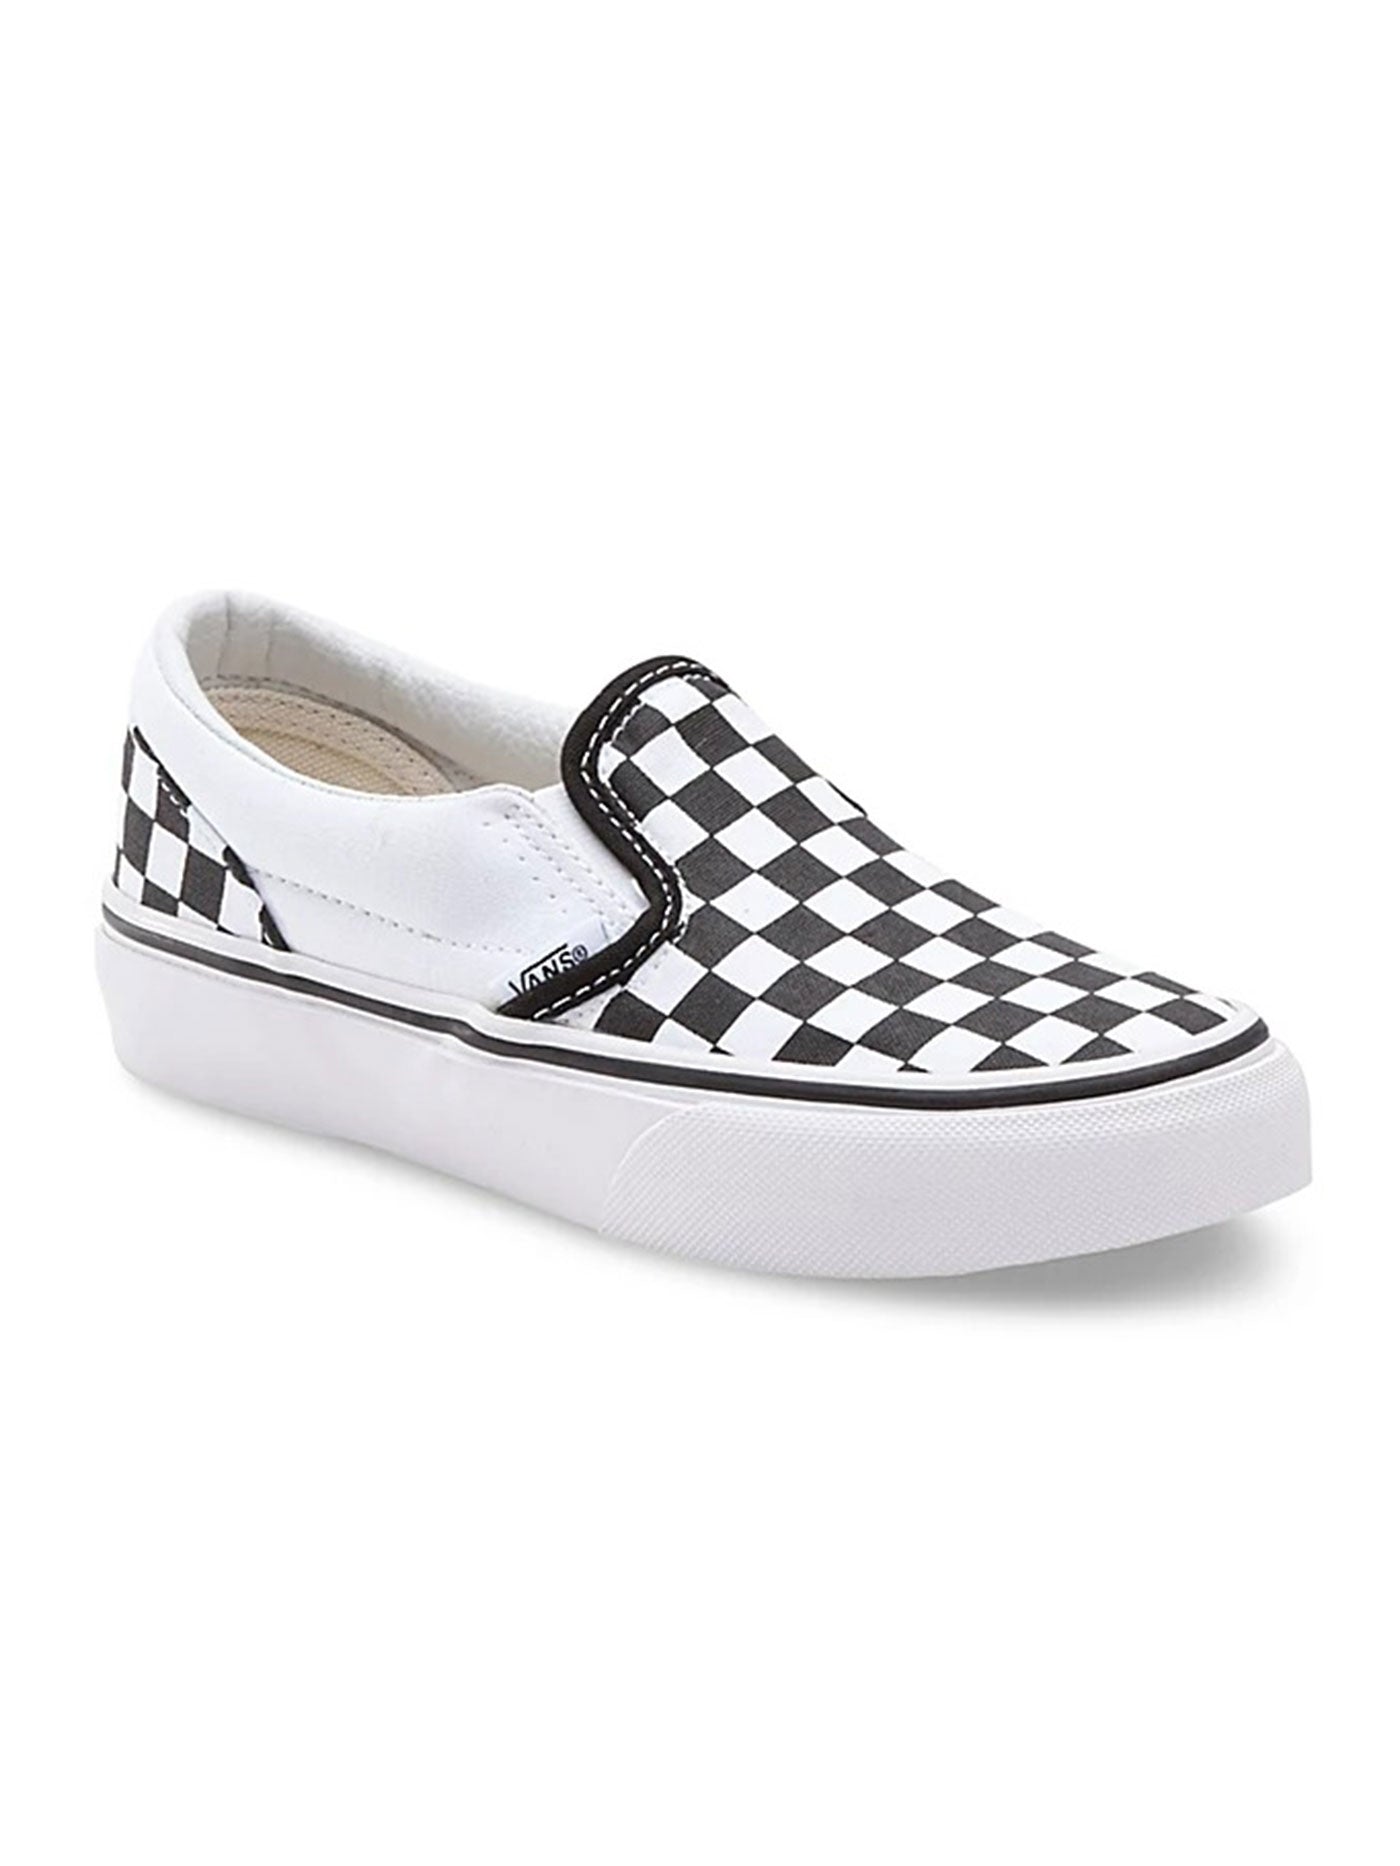 Vans Classic Checkerboard Black True White Slip On Shoes